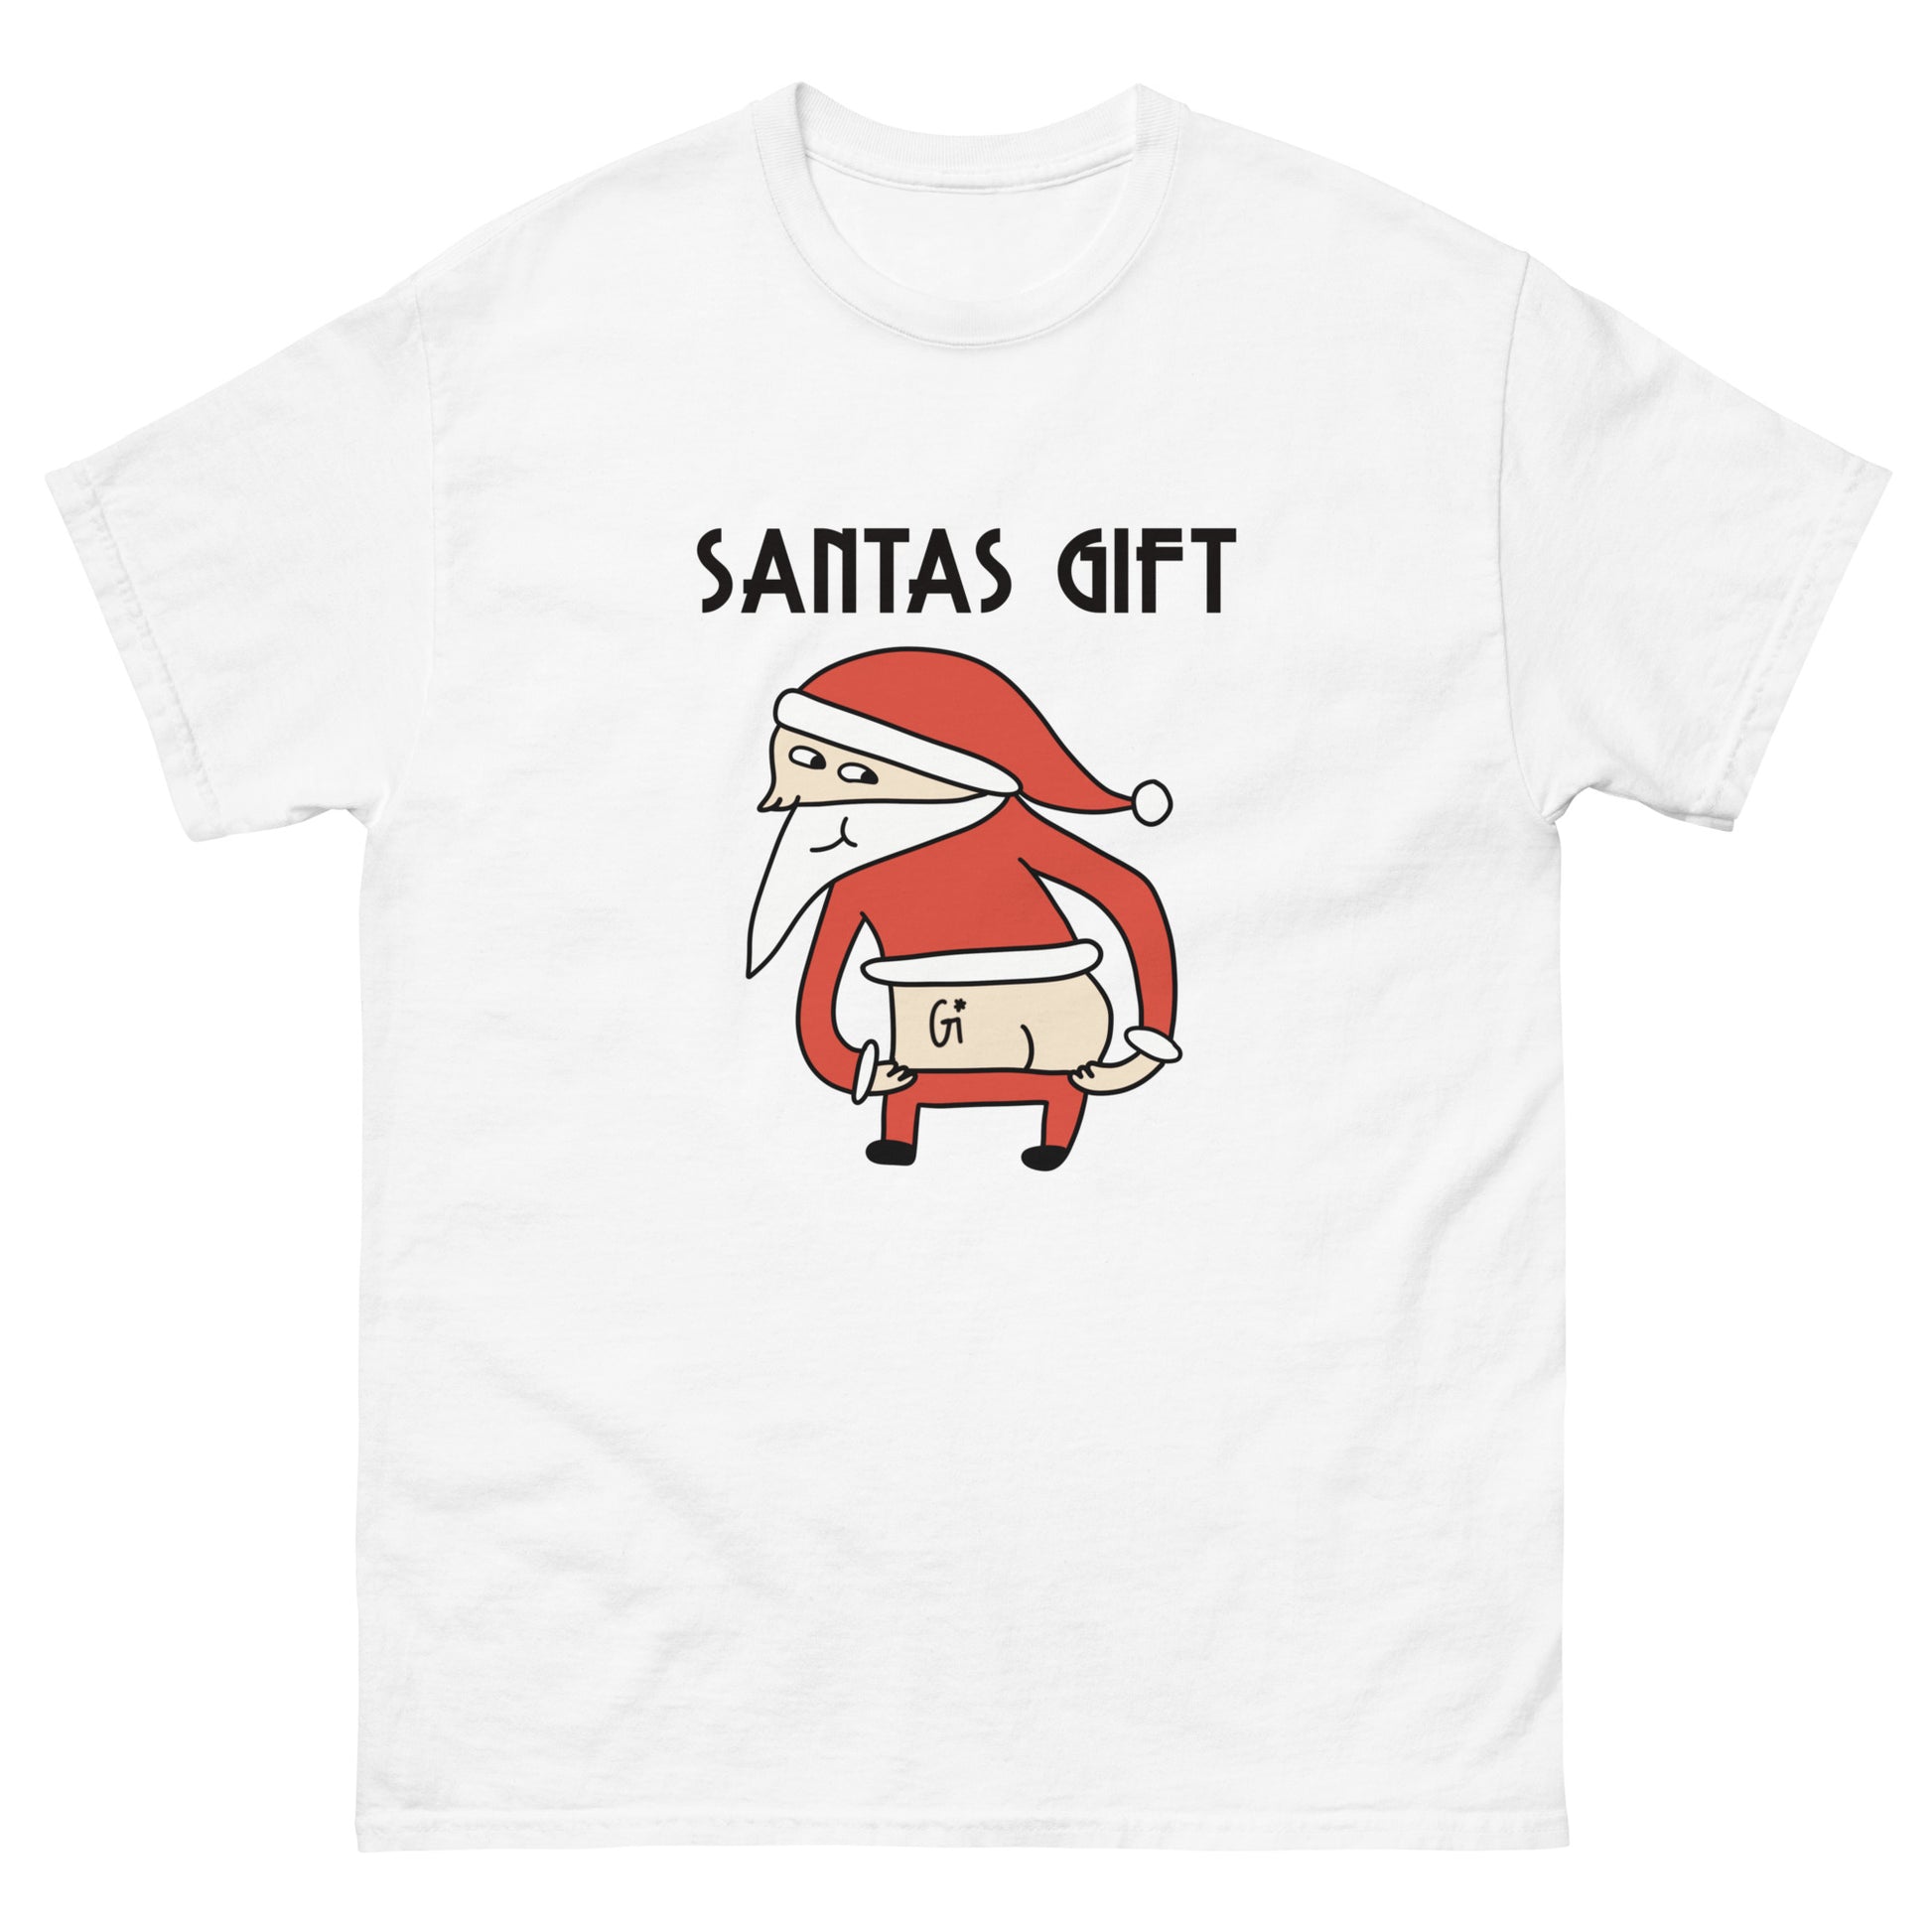 white color cotton t shirt with Santa's ass